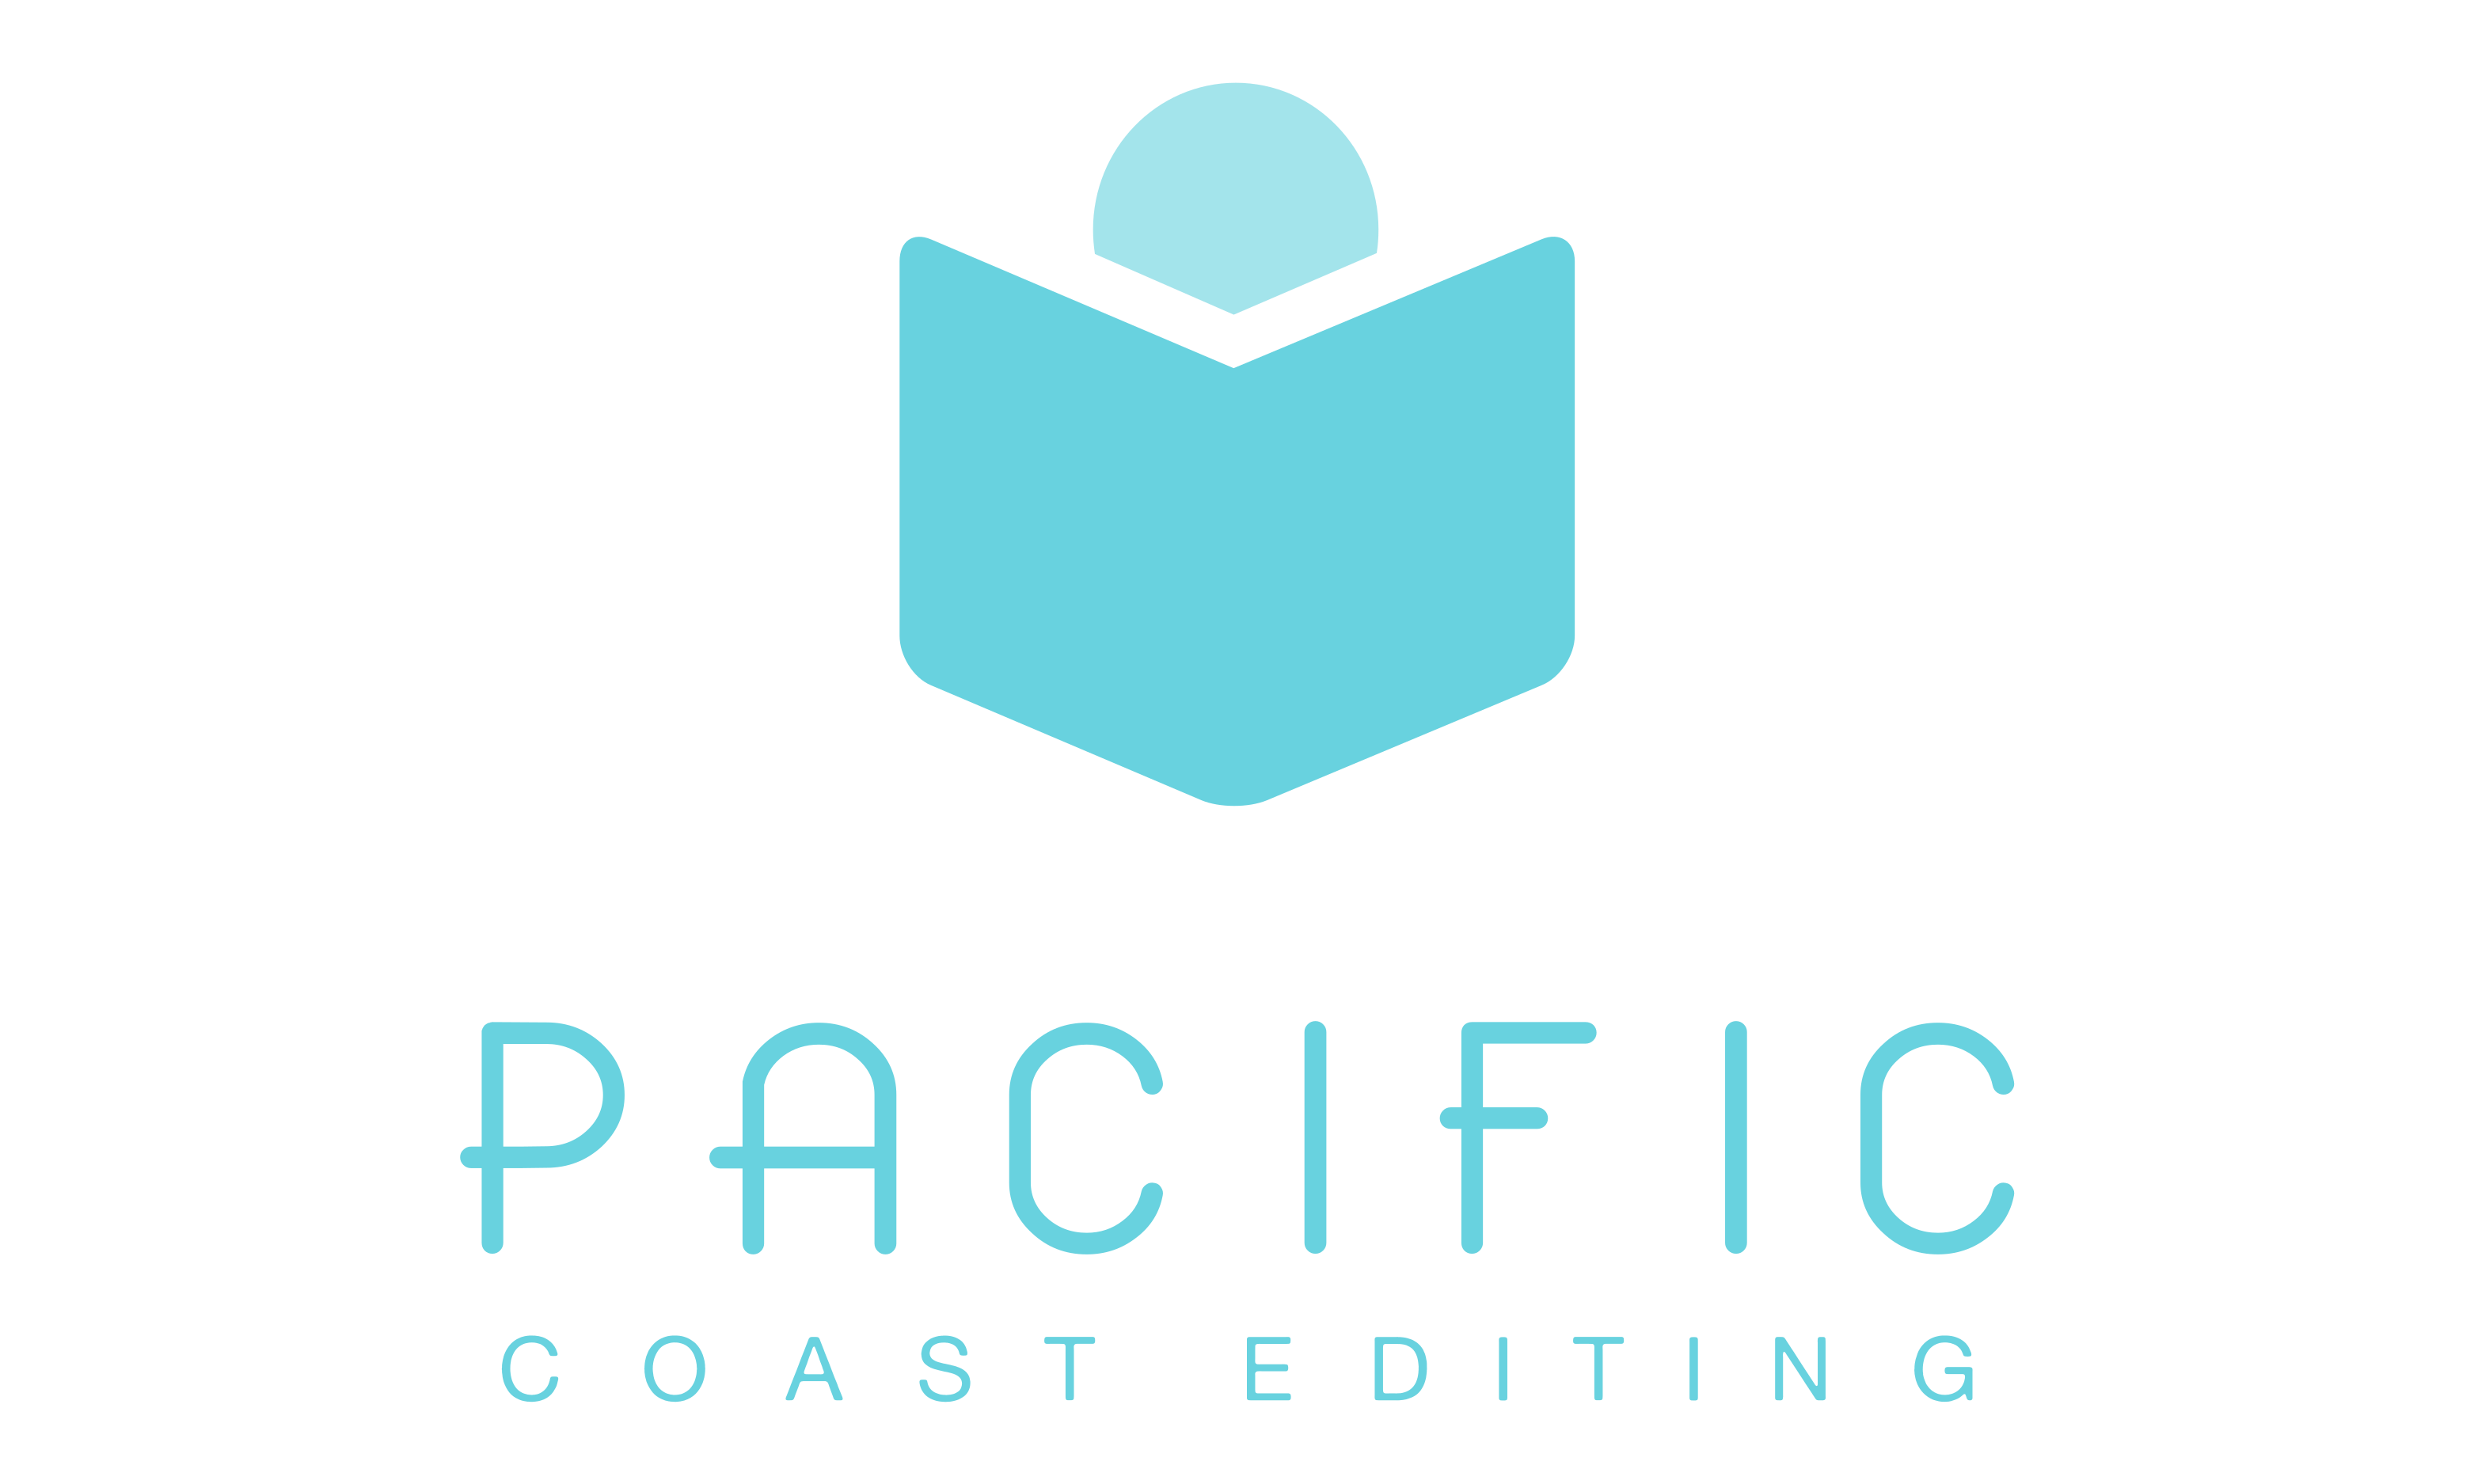 Pacific Coast Editing